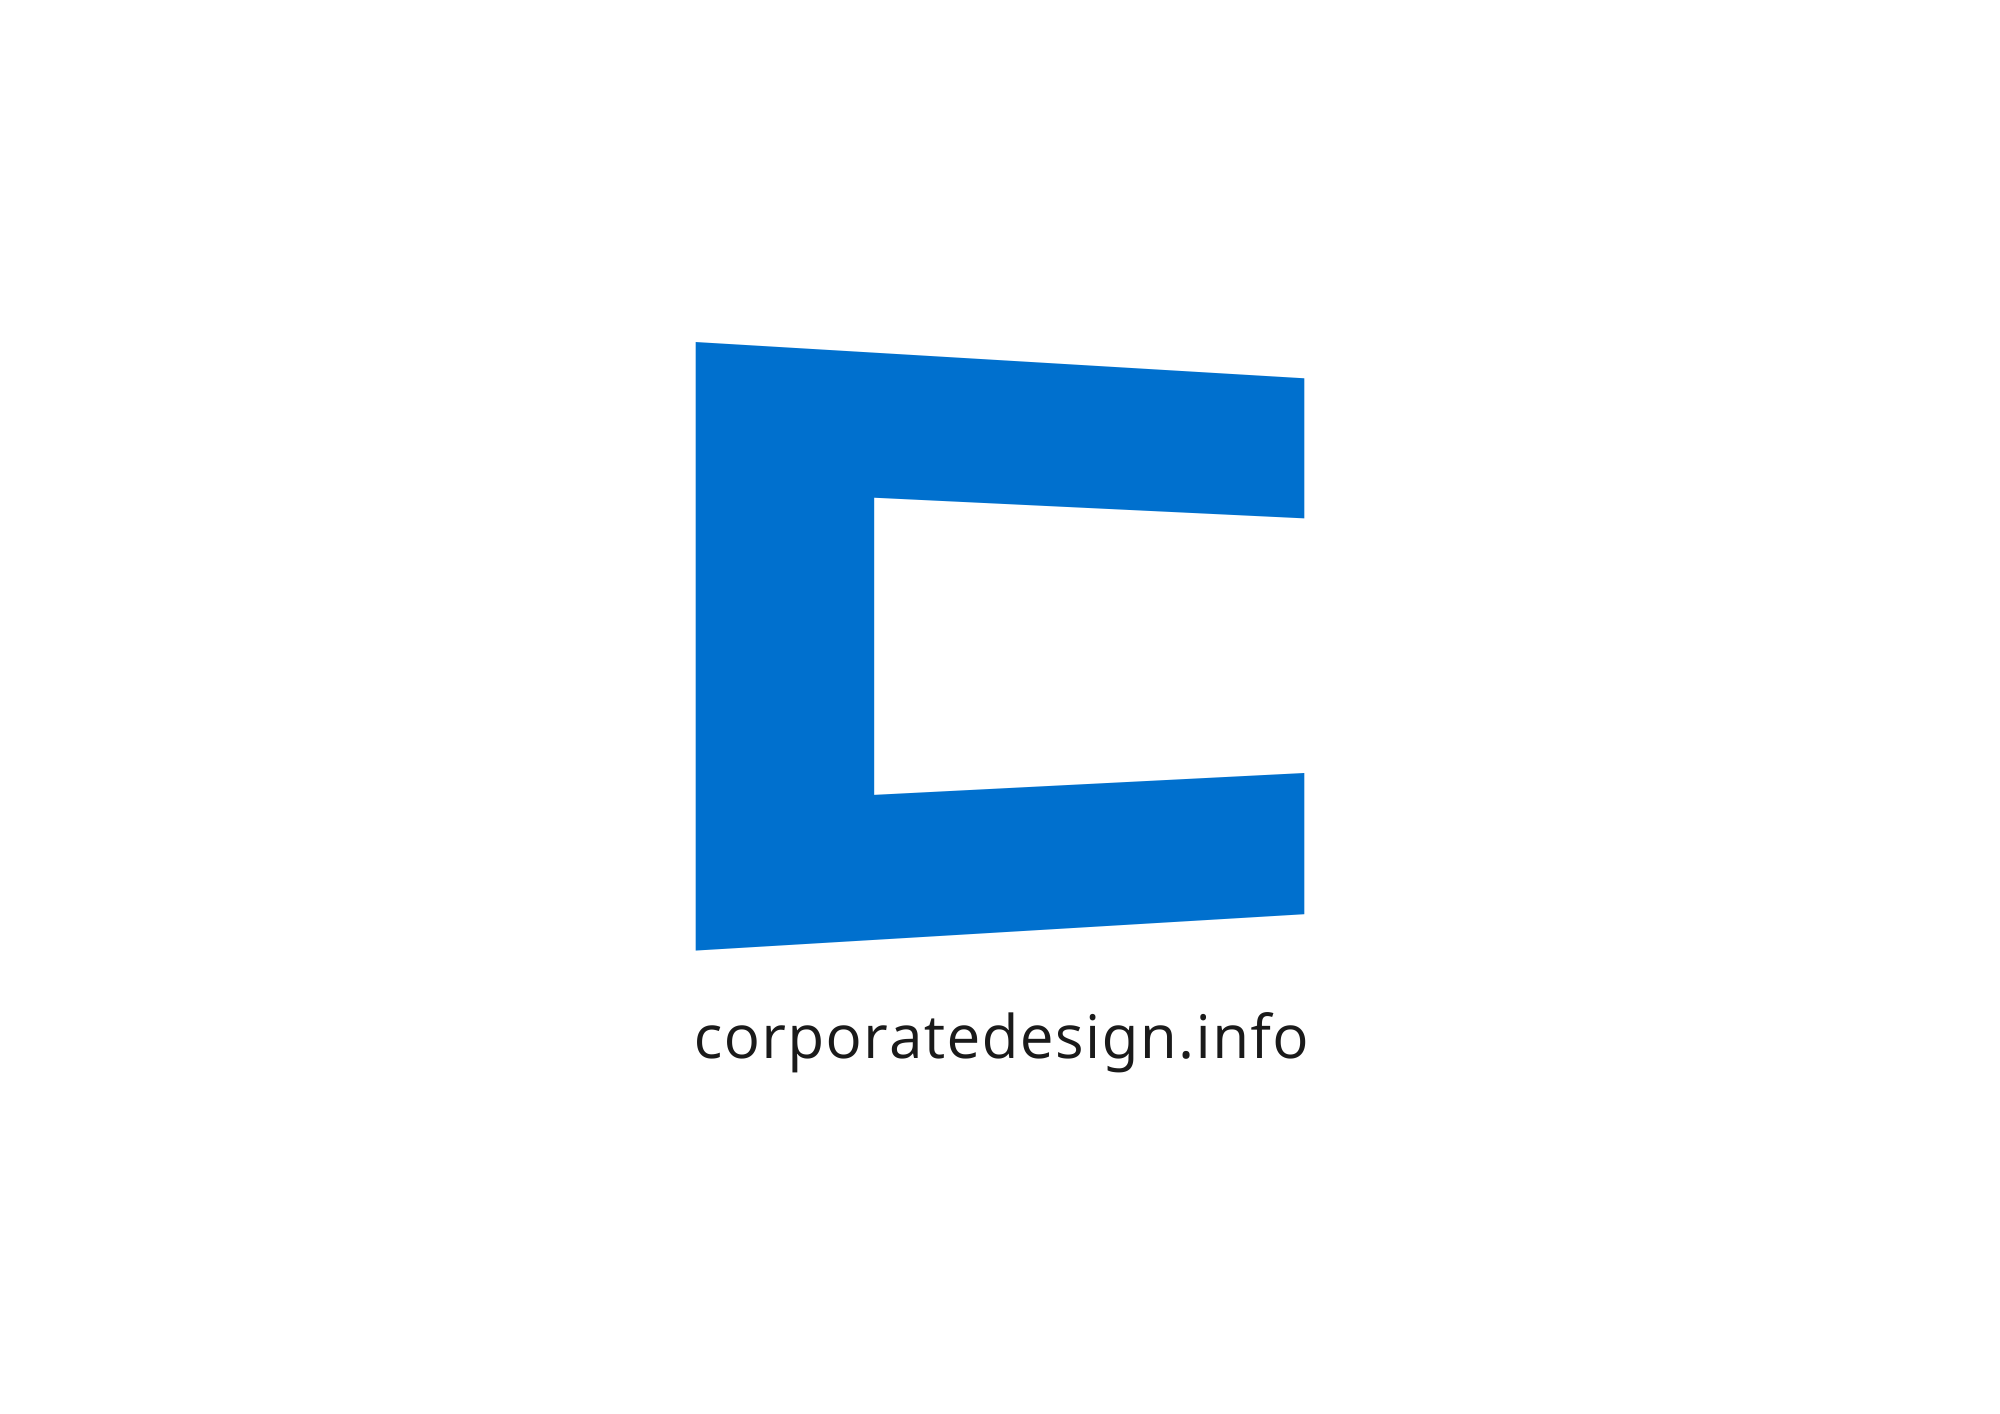 Das Corporate Design für CorporateDesign.info.